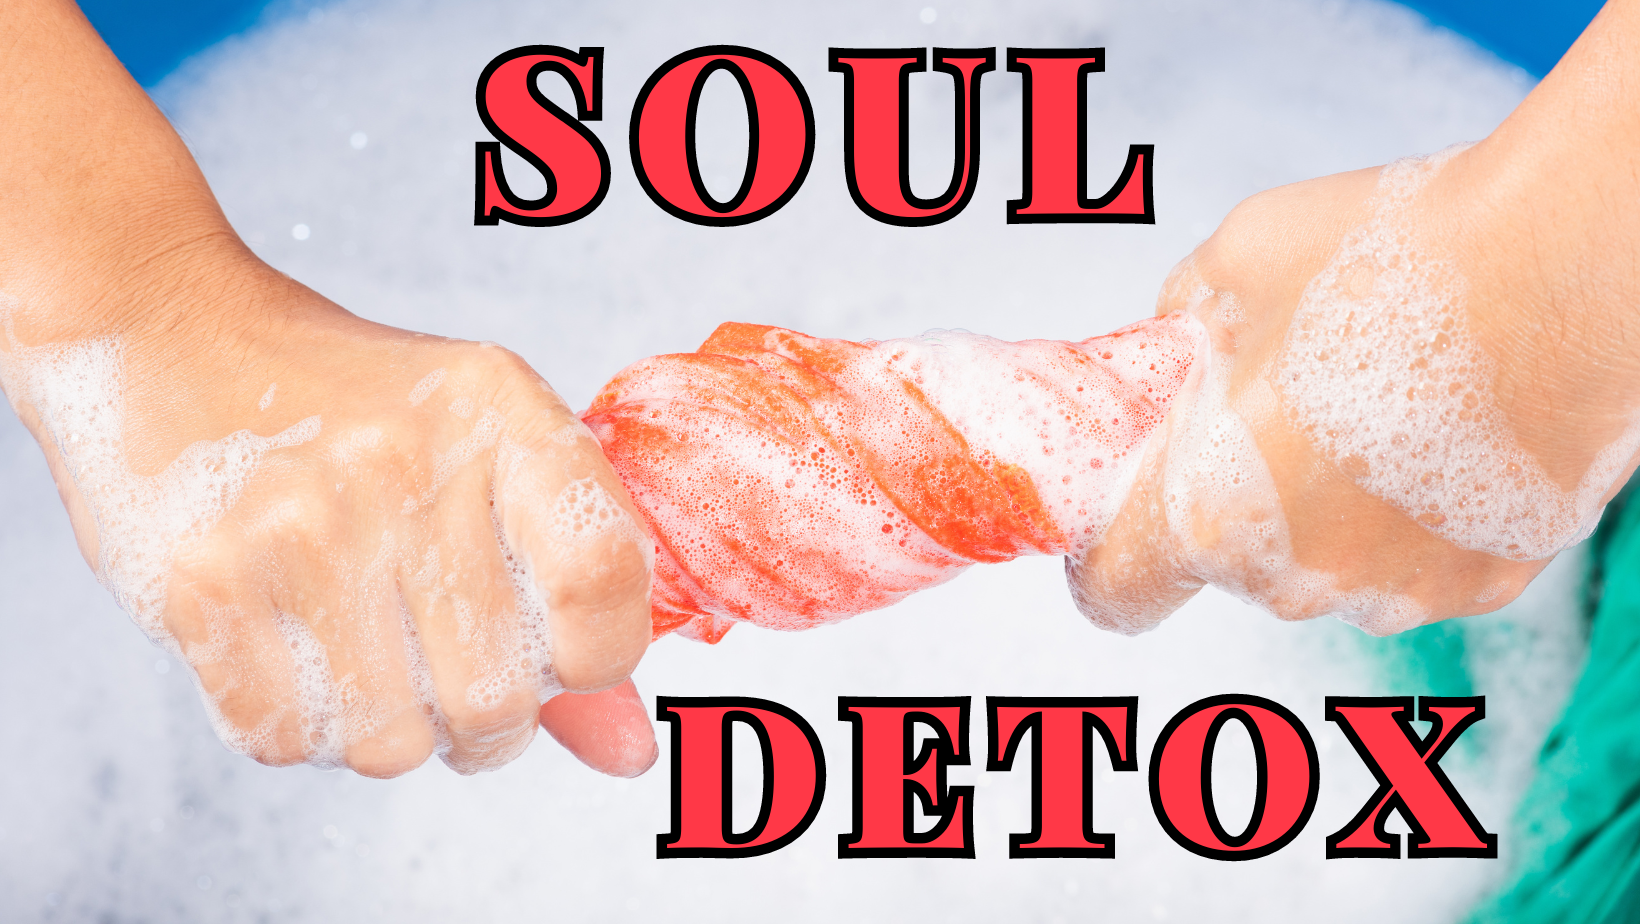 Soul Detox – Words